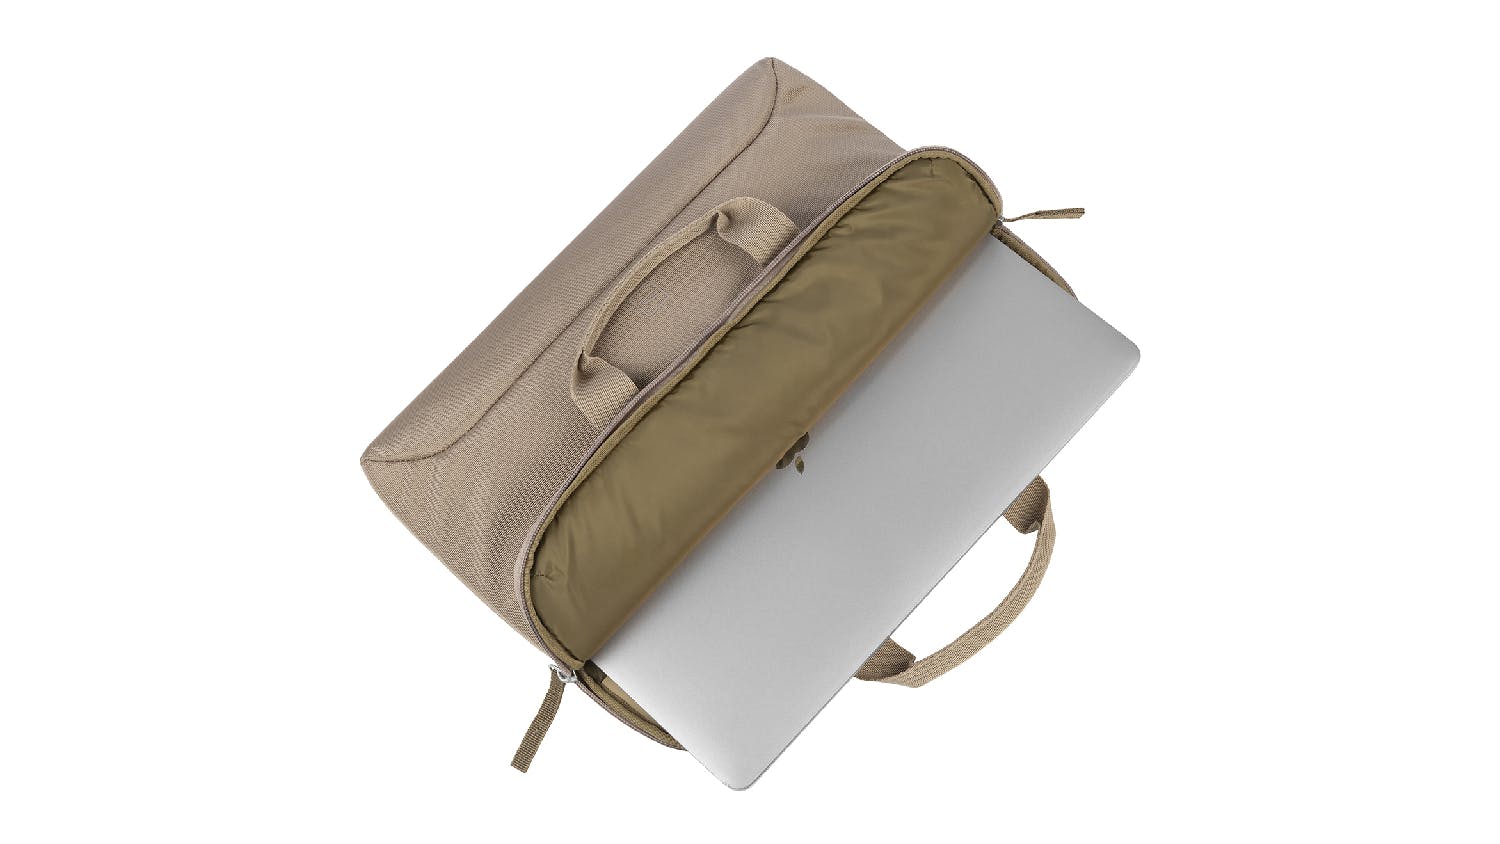 Tucano Smilza Super Slim Laptop Bag for 13-14" Device - Beige (BSM1314-BE)